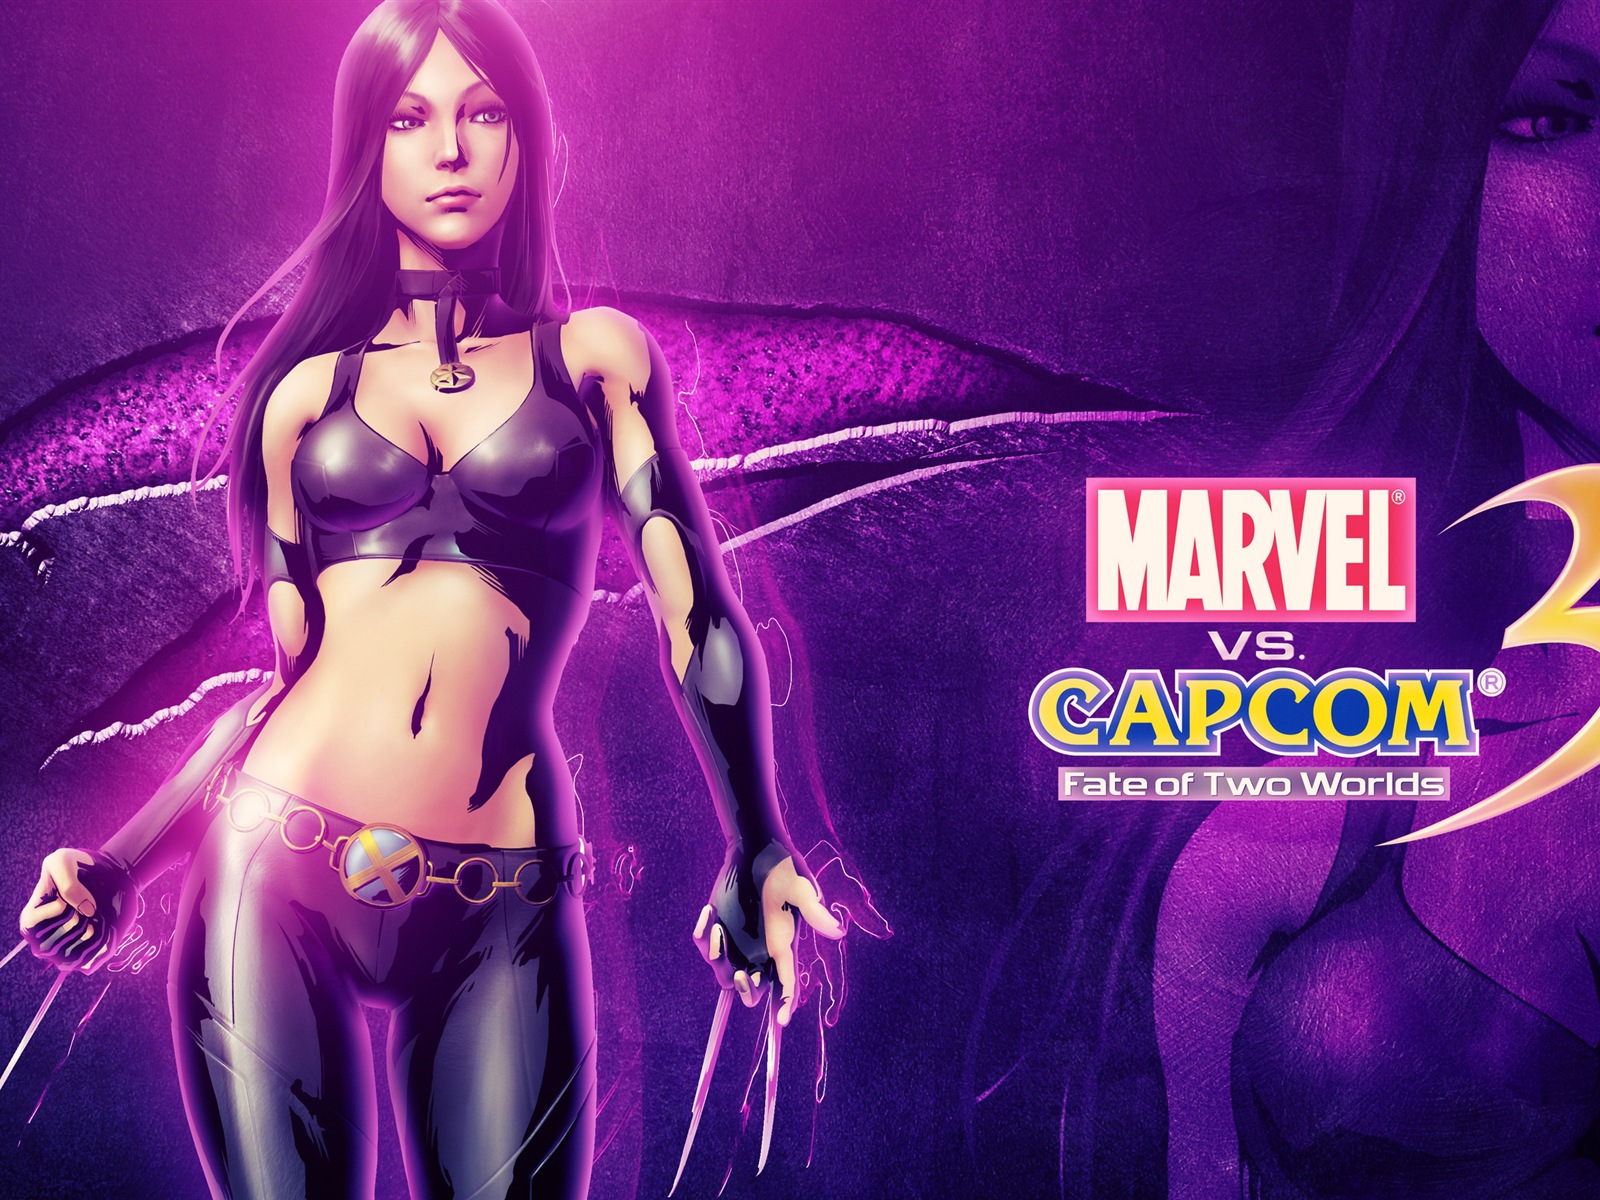 Marvel VS. Capcom 3: Fate of Two Worlds 漫画英雄VS.卡普空3 高清游戏壁纸10 - 1600x1200